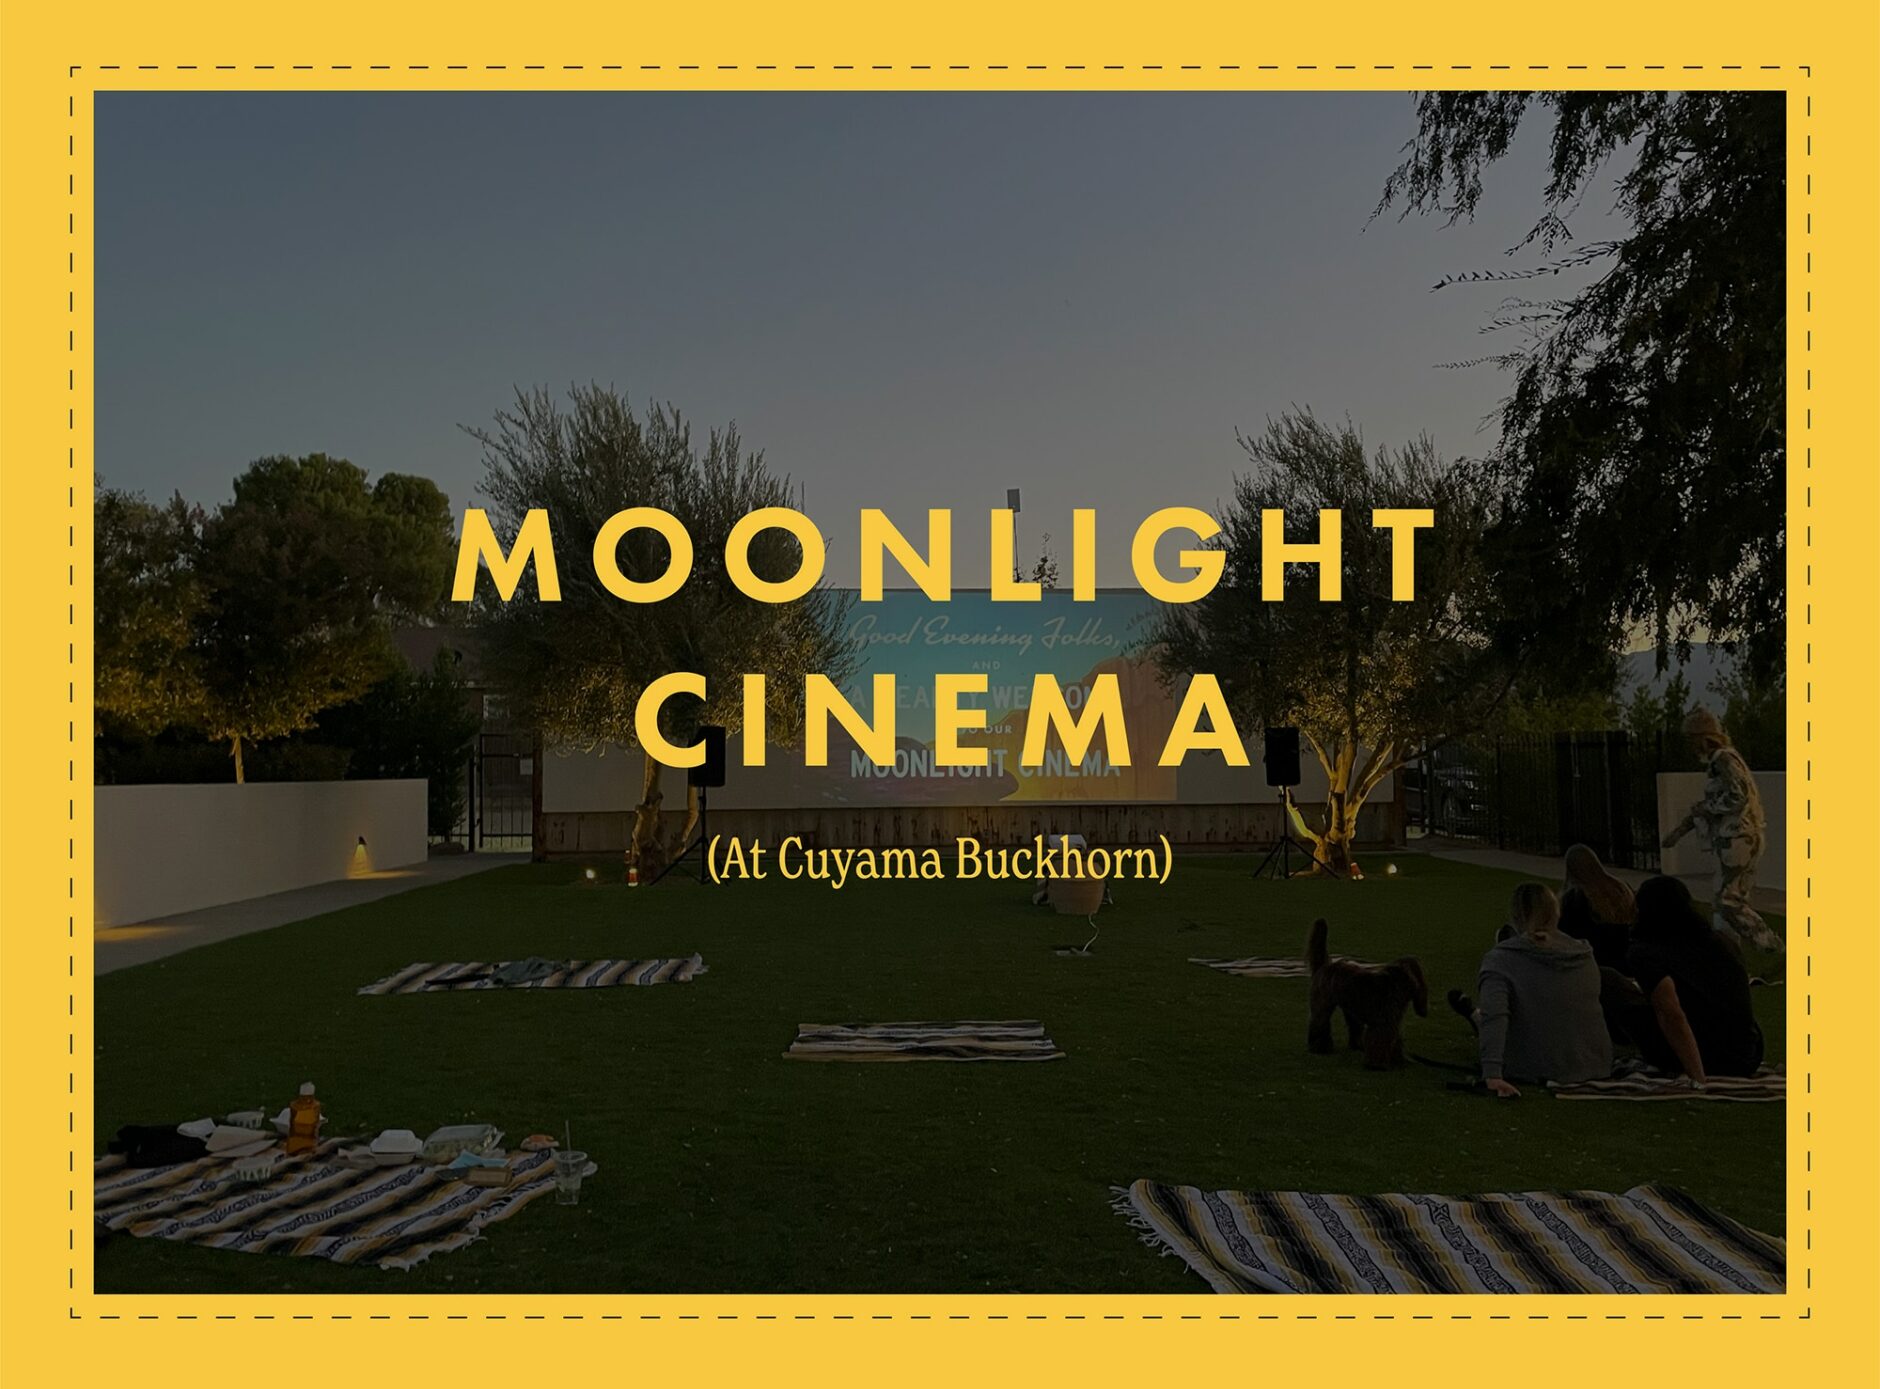 Moonlight Cinema, Cuyama Buckhorn